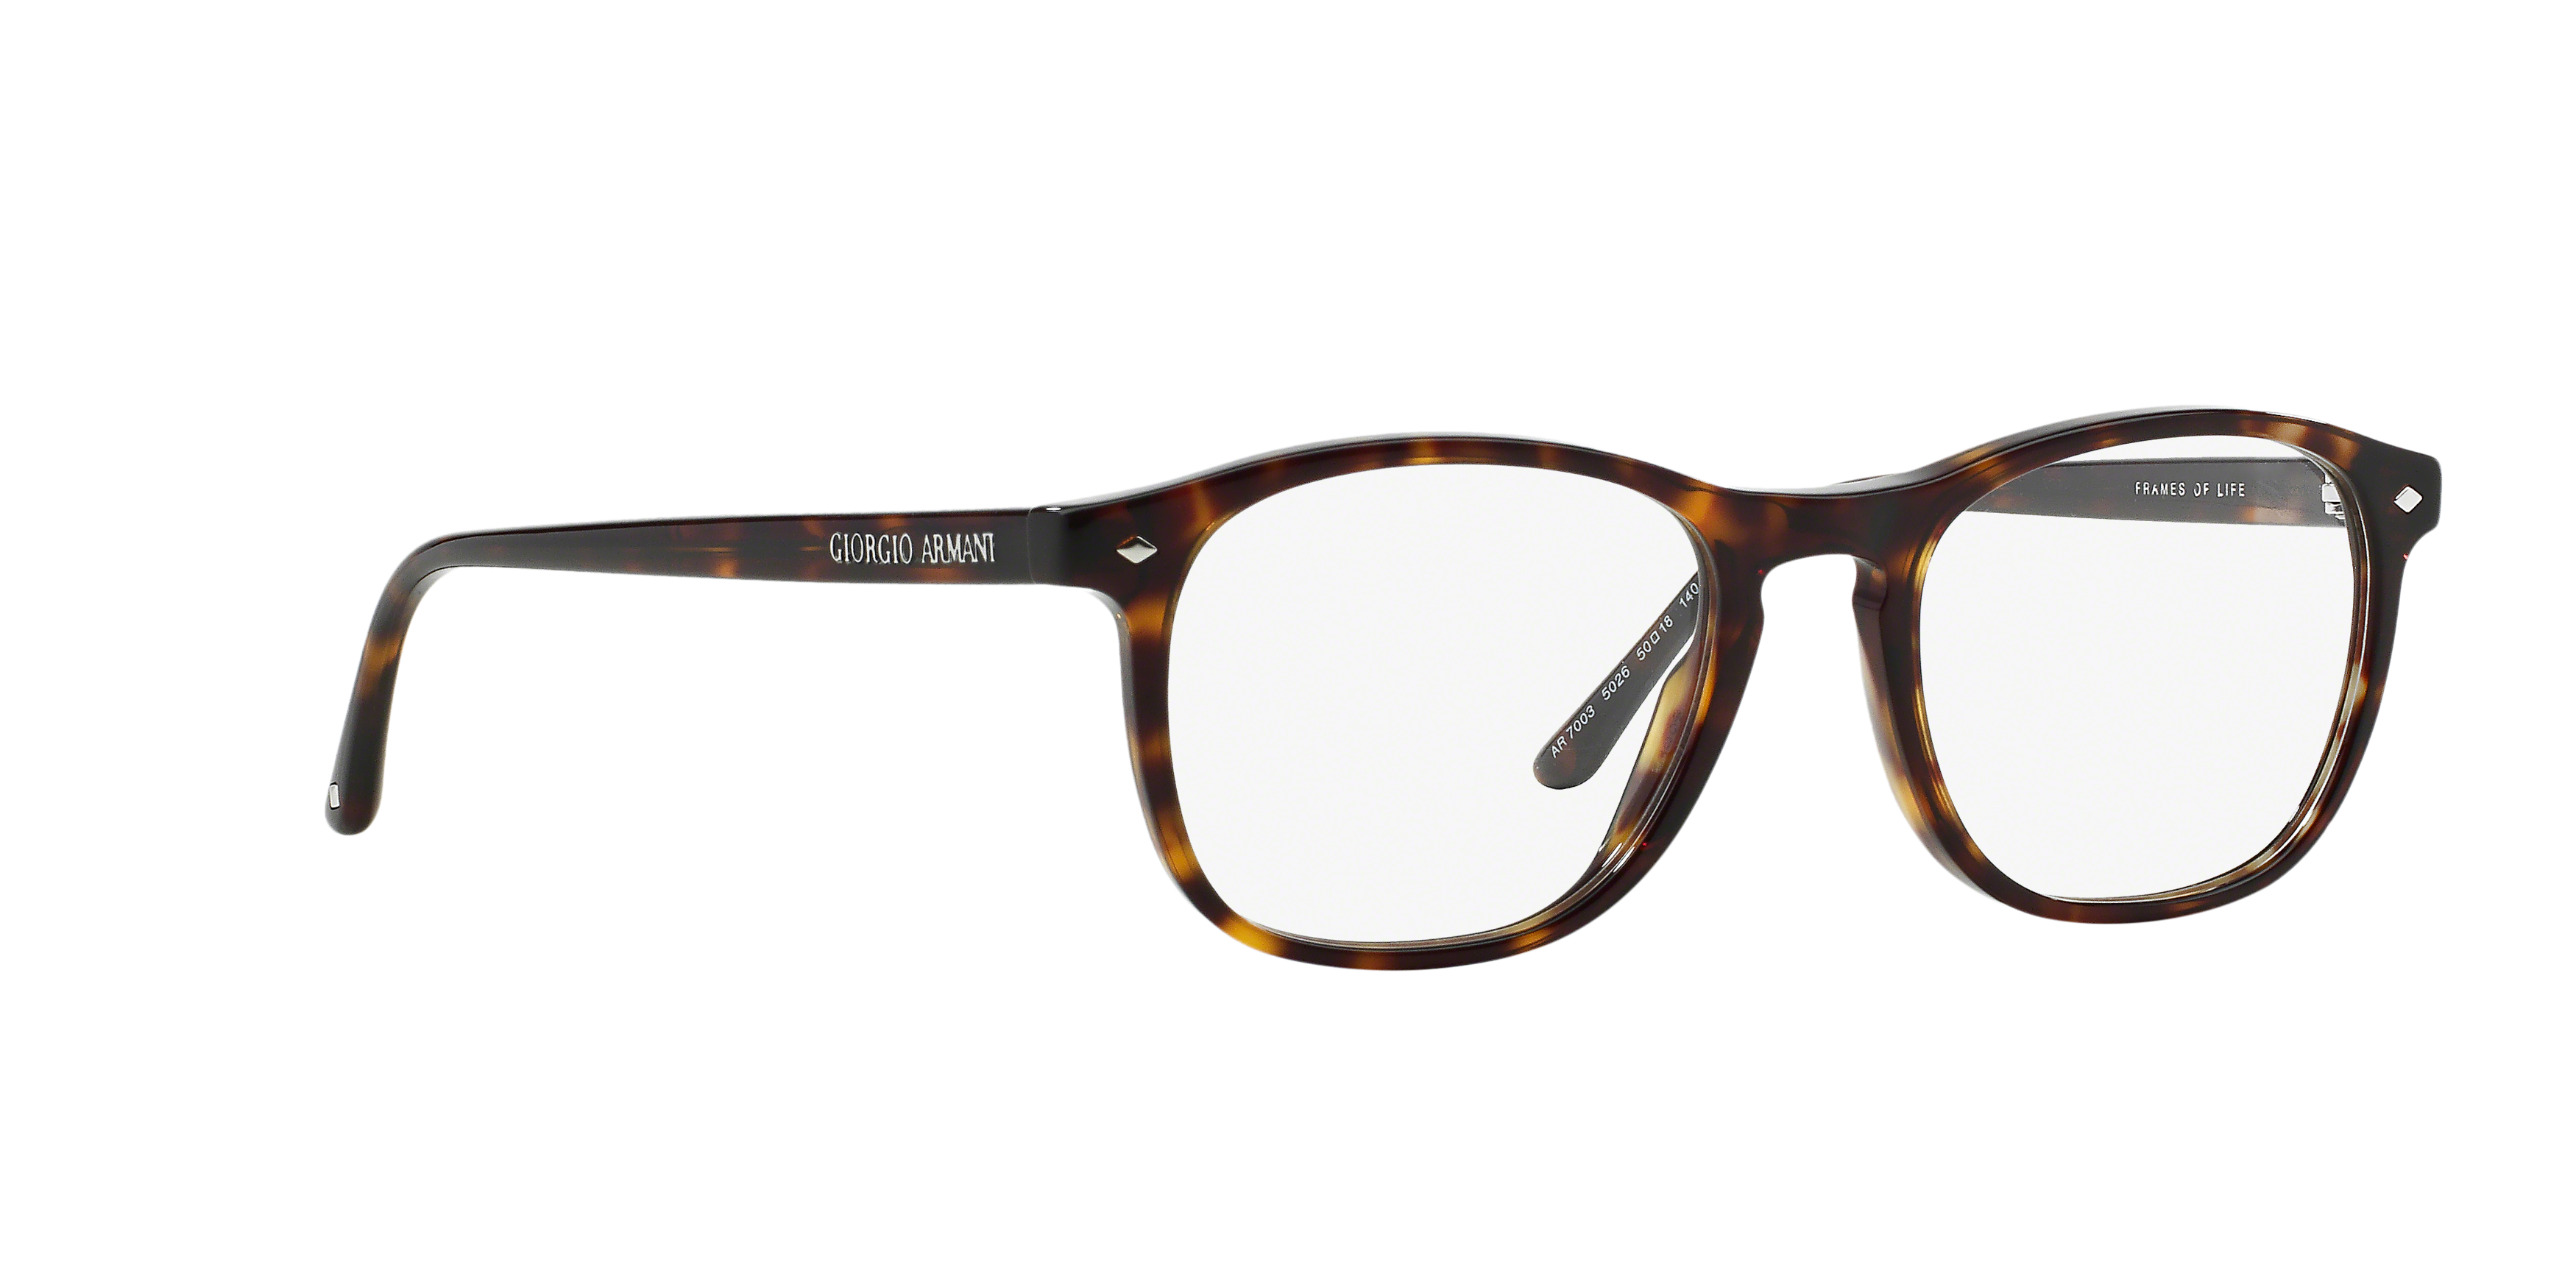 Angle_Right01 Giorgio Armani AR 7003 (5026) Glasses Transparent / Tortoise Shell